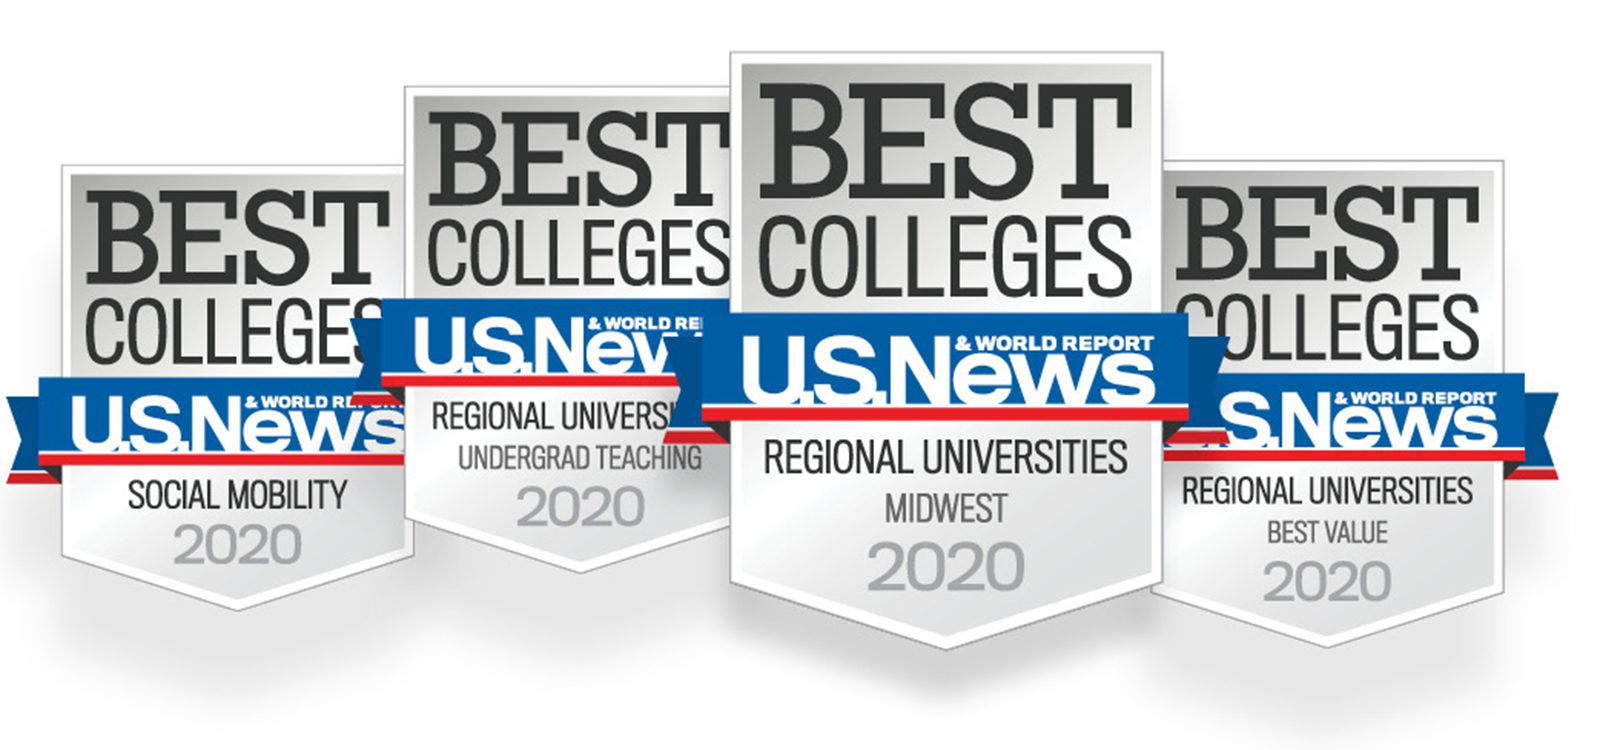 Olivet_US NEWS_best_college_academic_midwest_2019.jpg